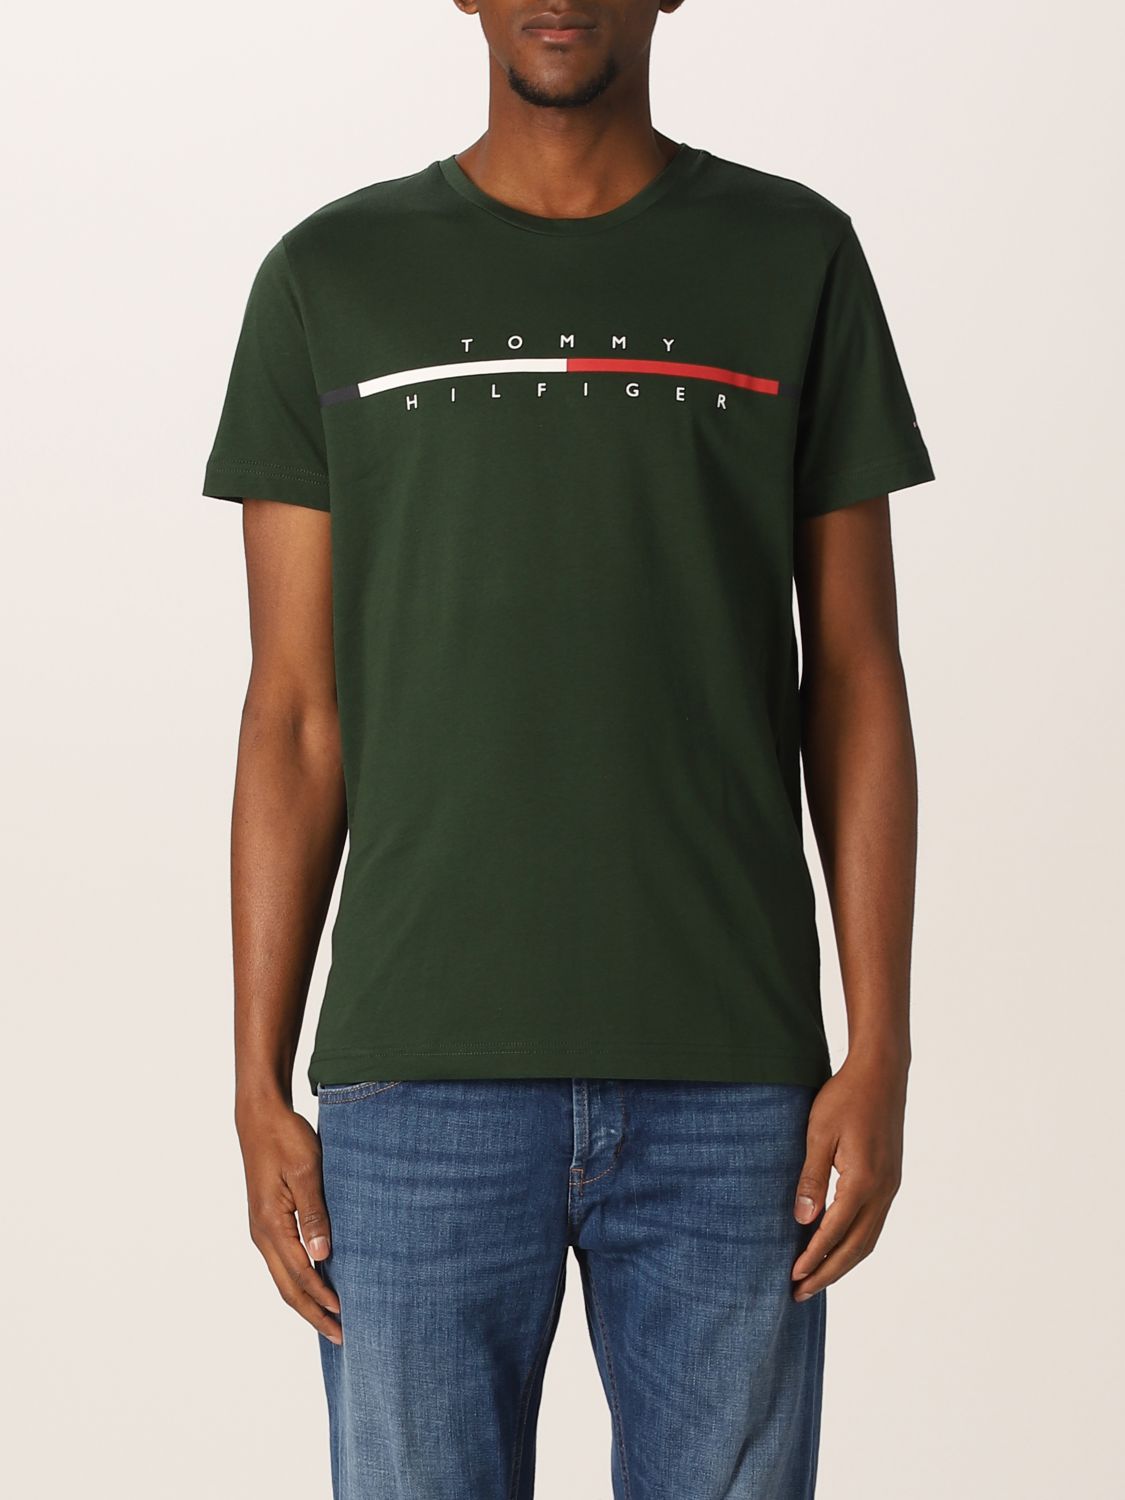 TOMMY HILFIGER: T-shirt - Green | t-shirt MW0MW22128 online on